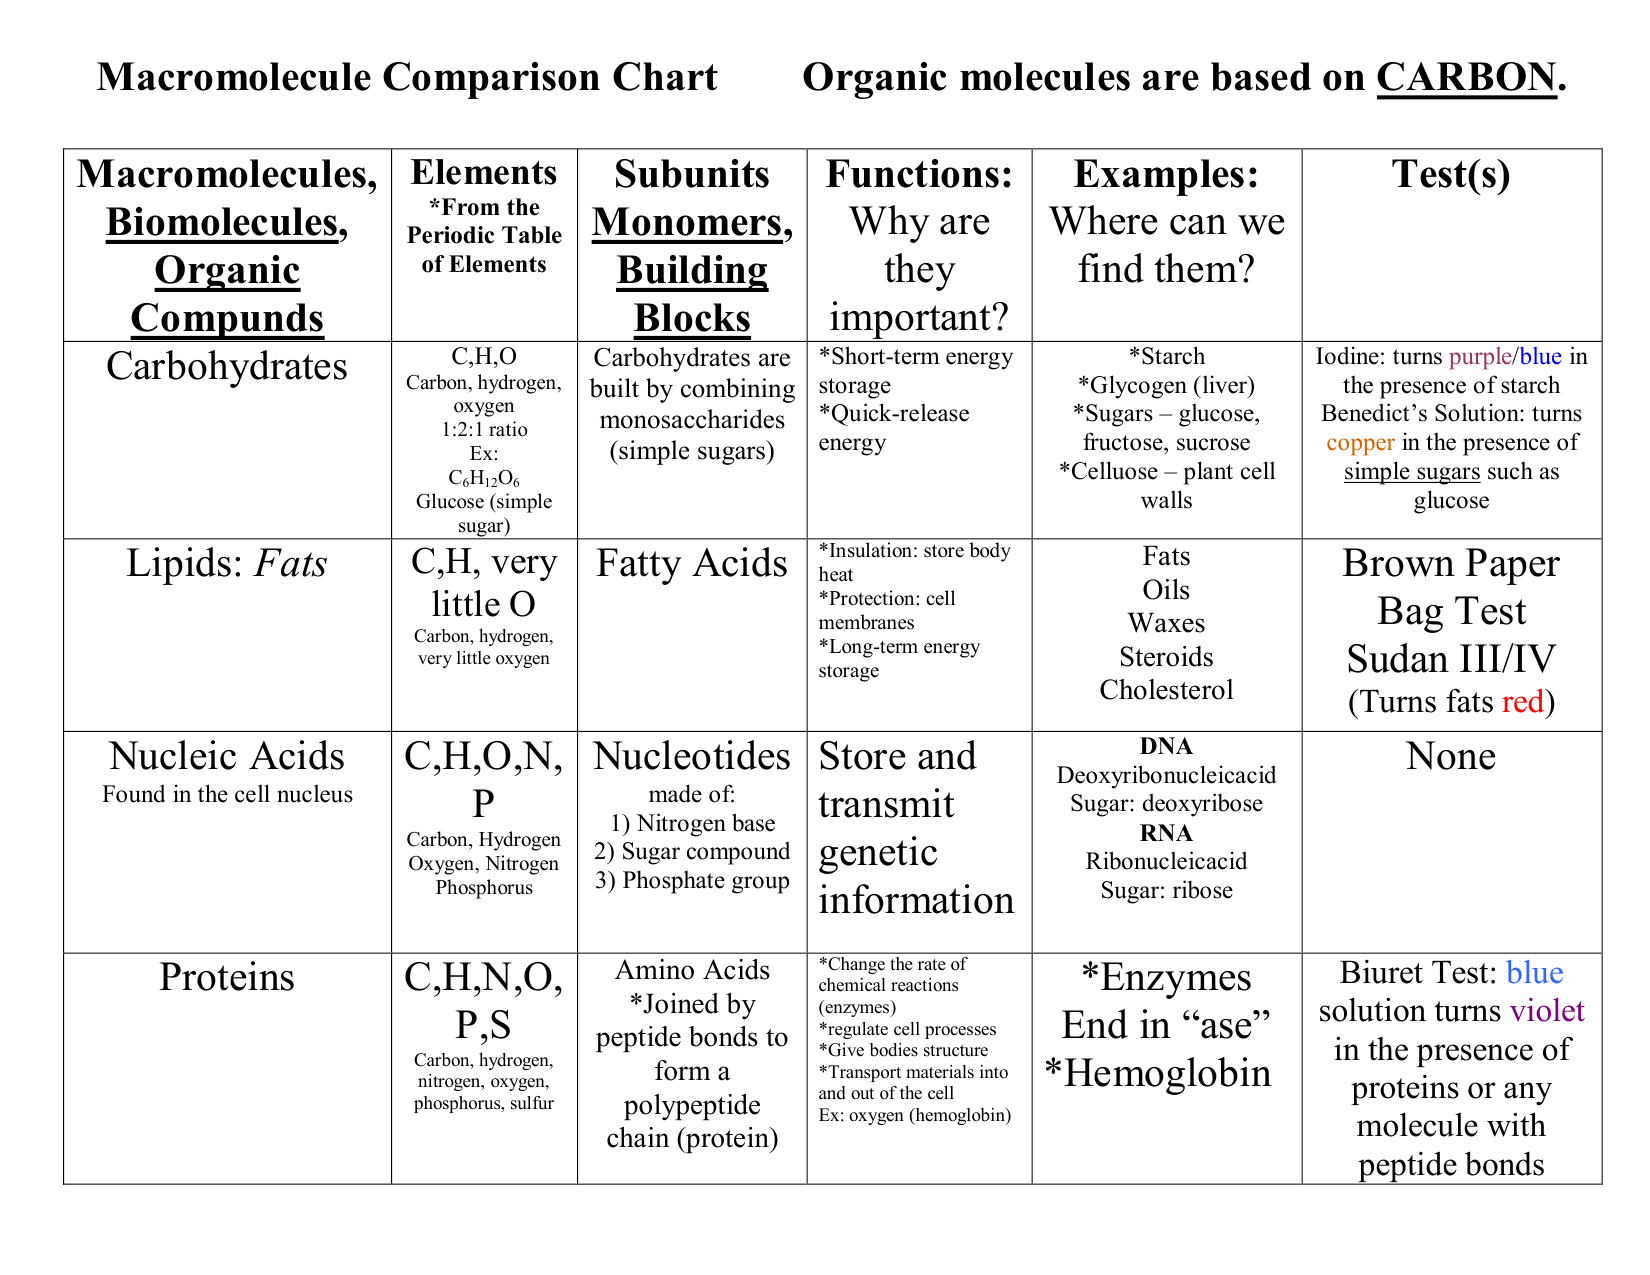 Cell Comparison Chart